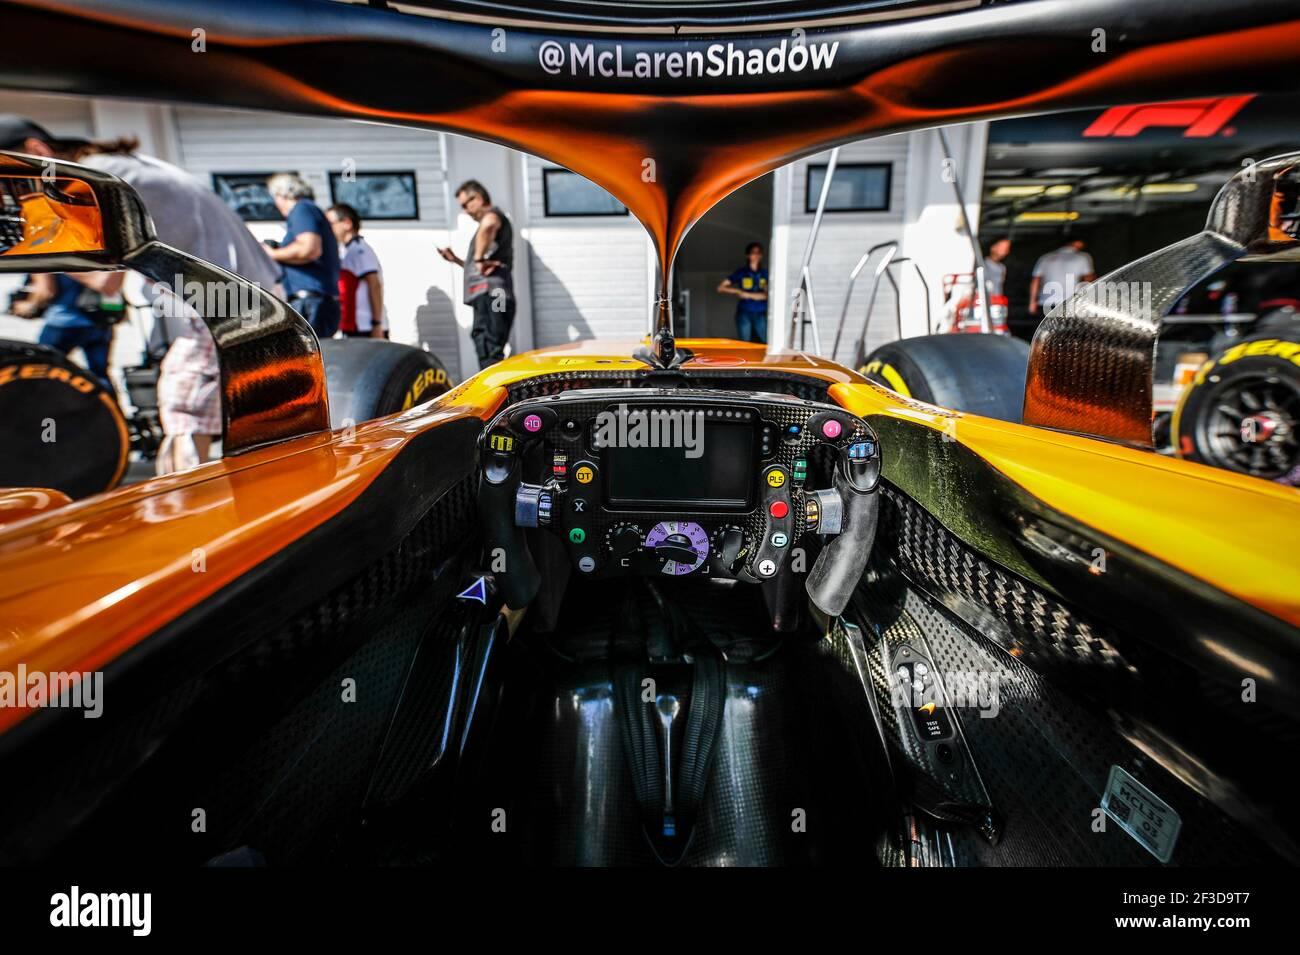 Mclaren Renault Mcl33 Cockpit And Steering Wheel Details During